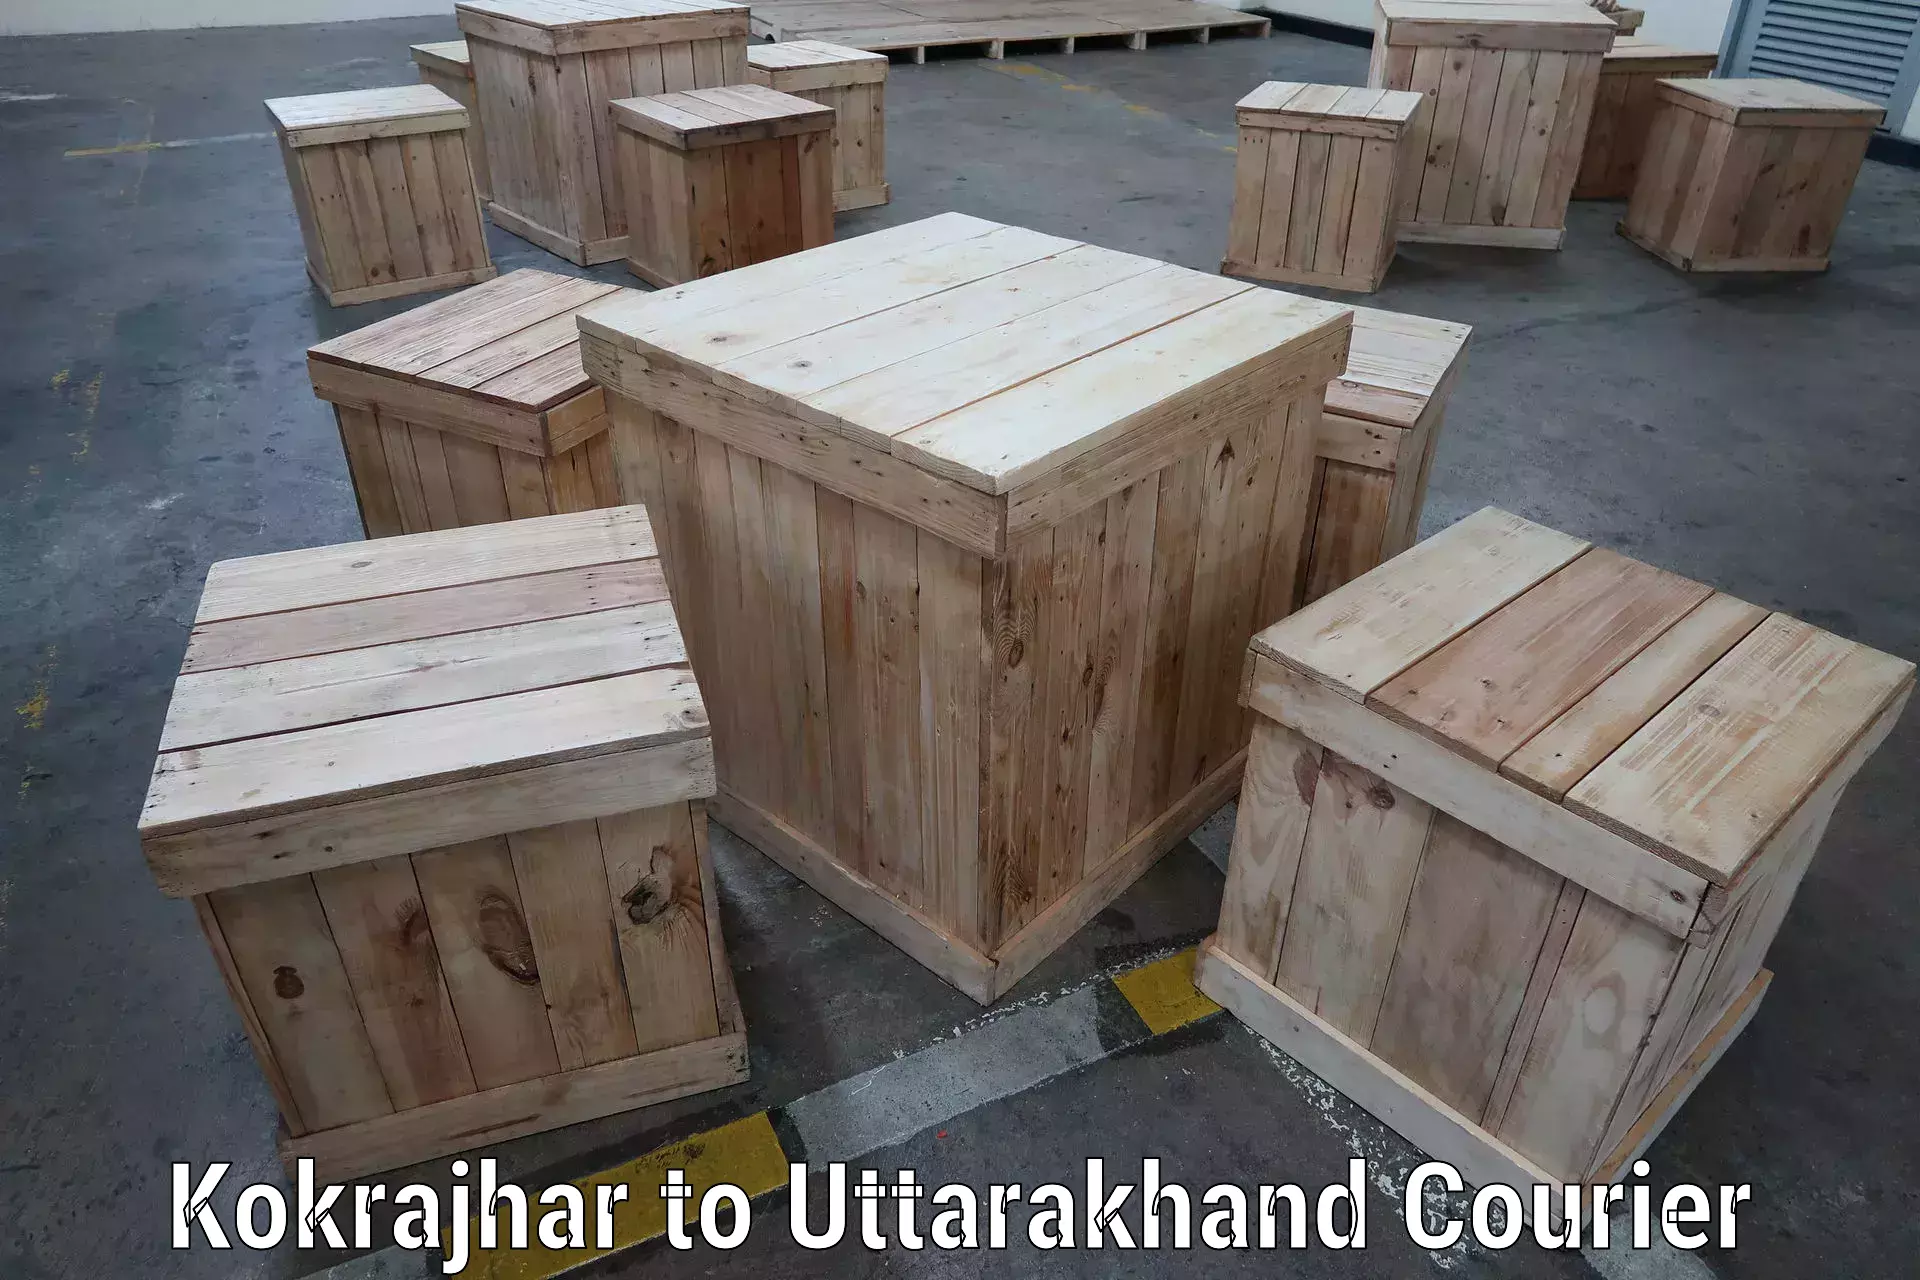 Supply chain efficiency Kokrajhar to Tehri